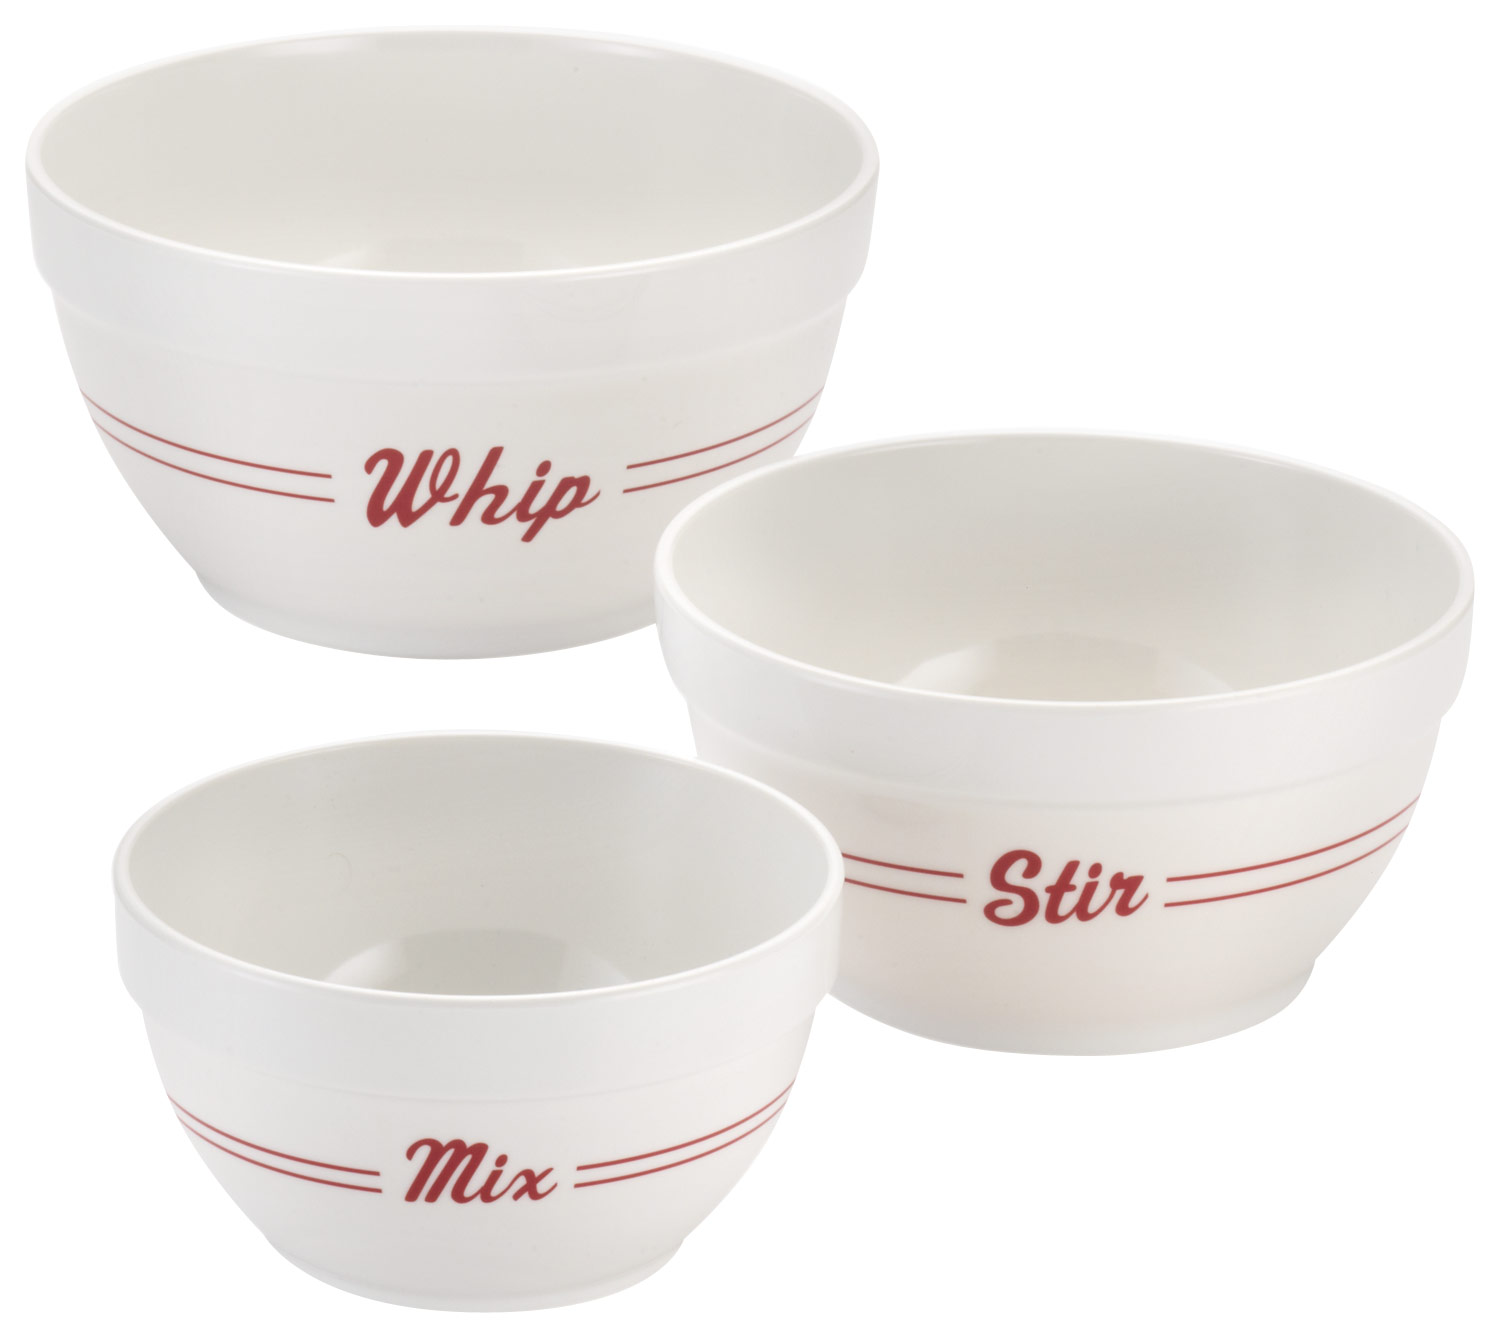 3-Piece Mixing Bowl Set - White